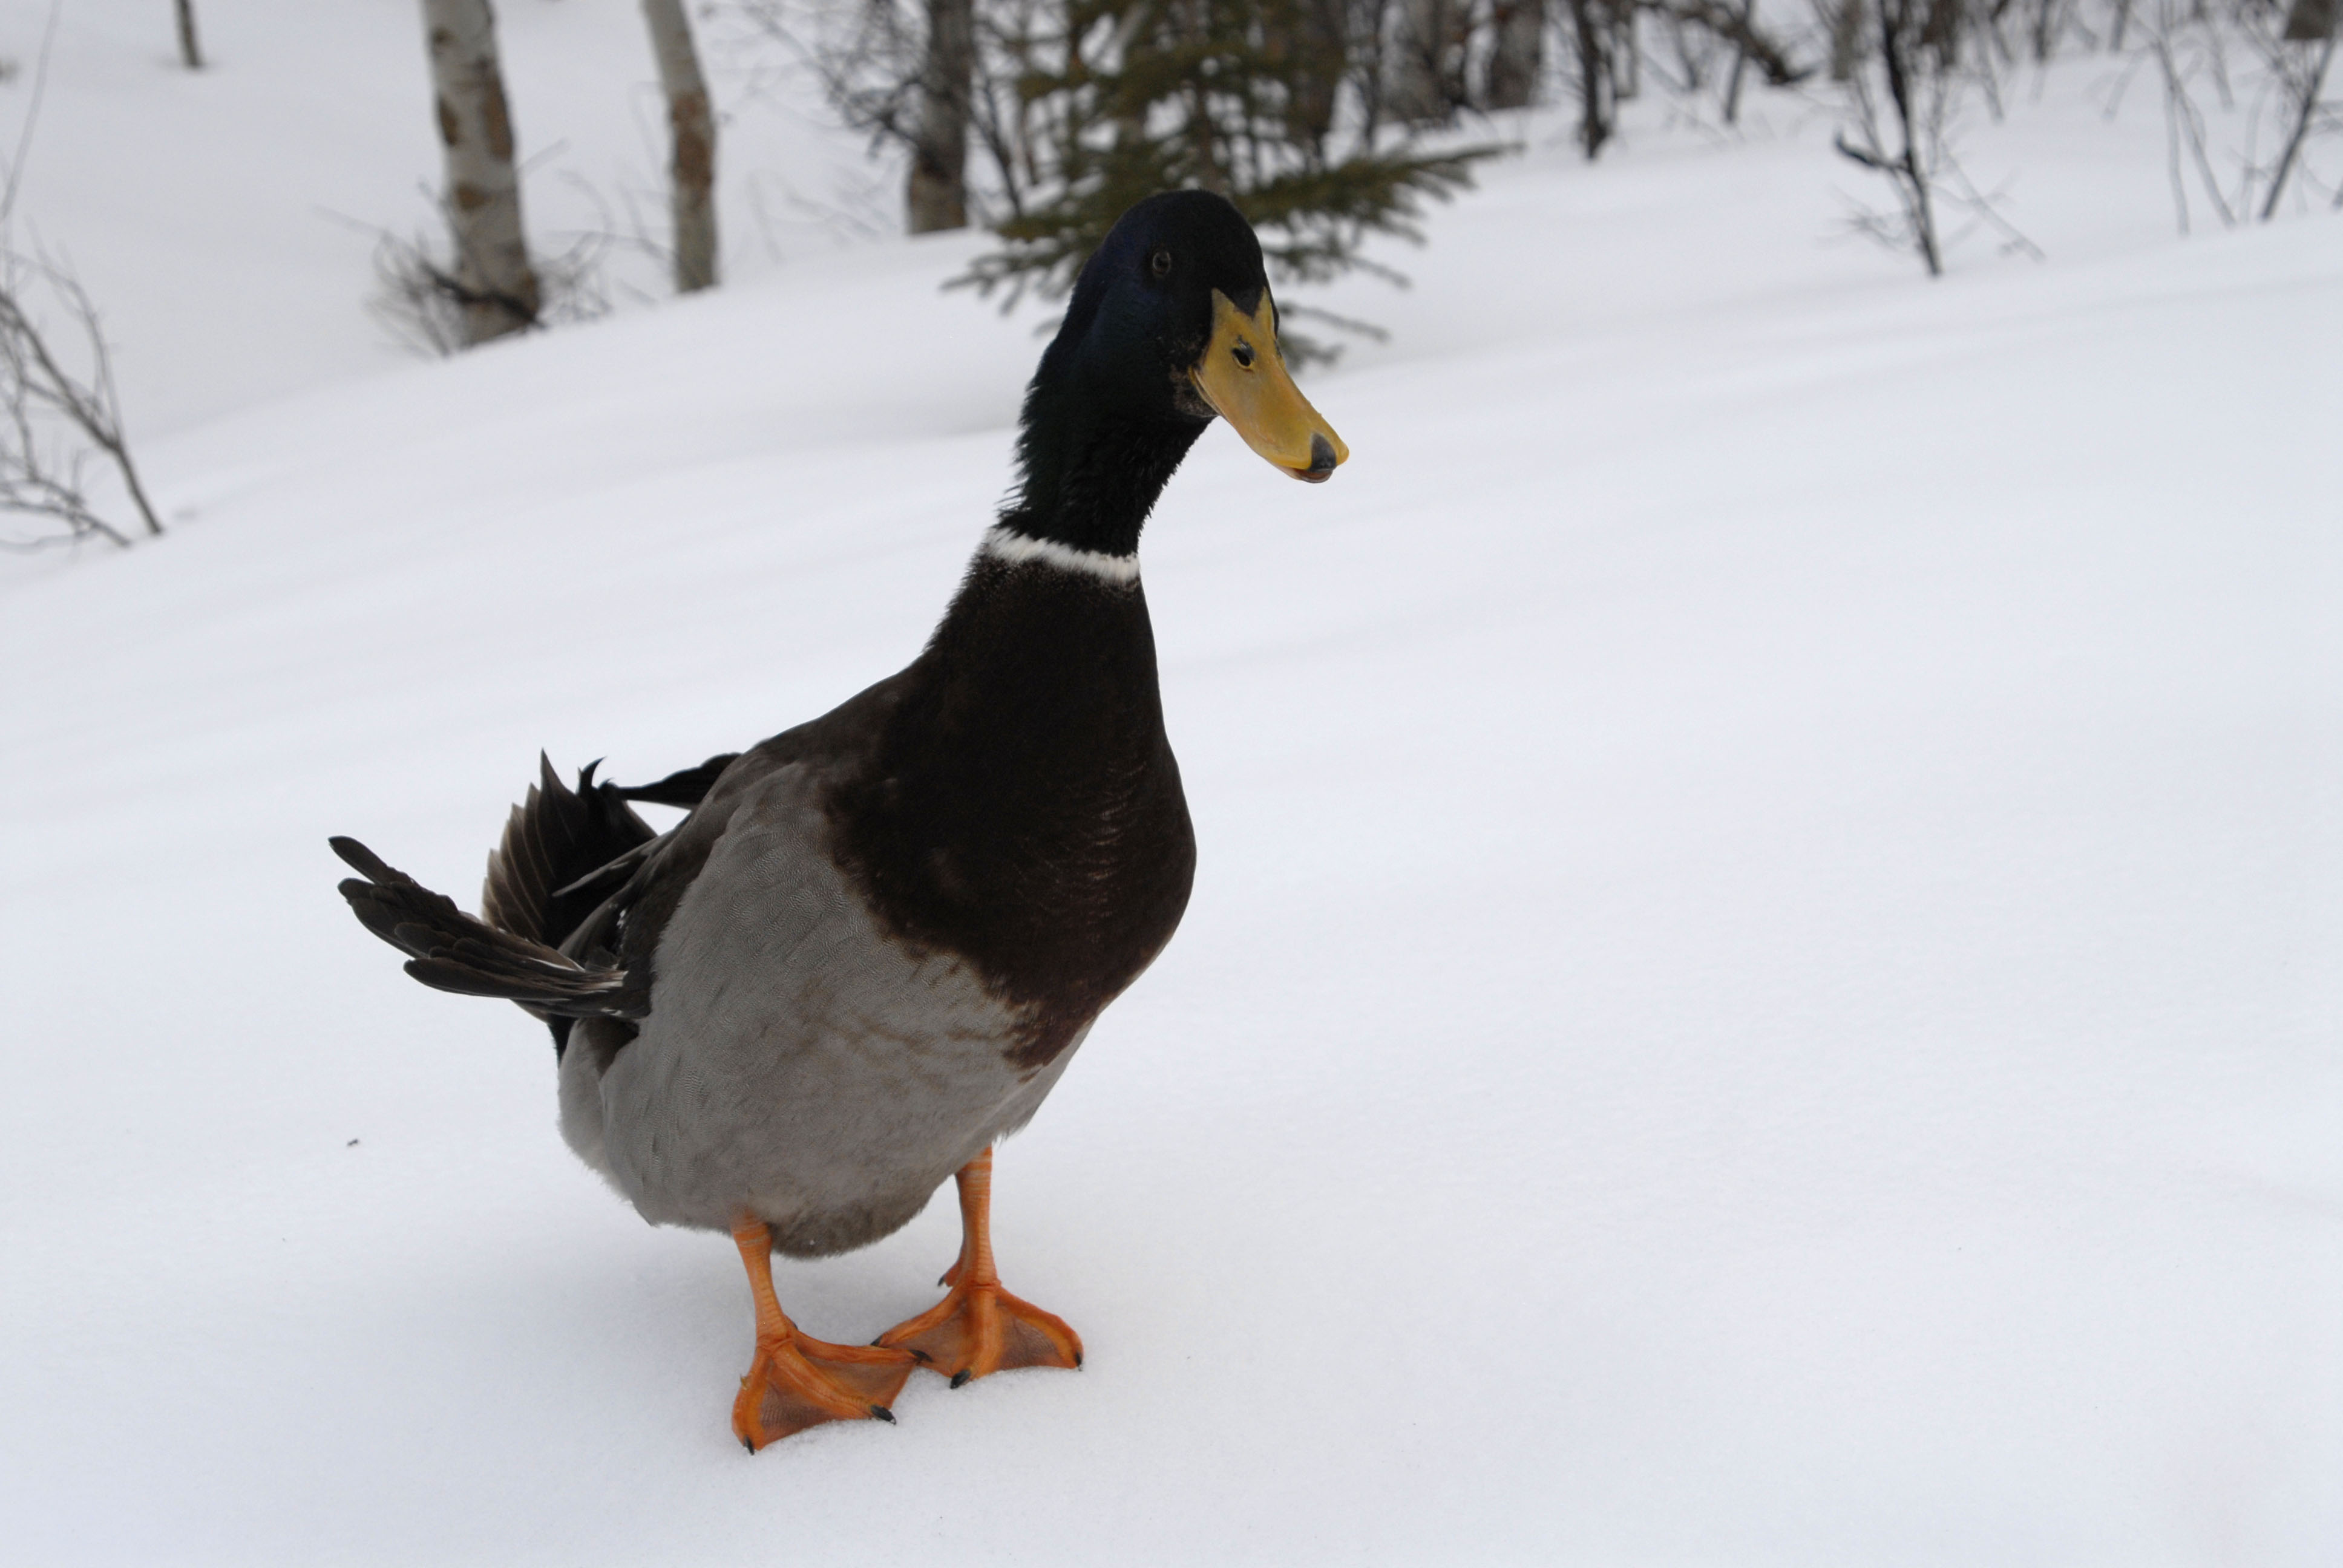 Doosie Duckson le canard de Roun 2006-4-2 009.jpg